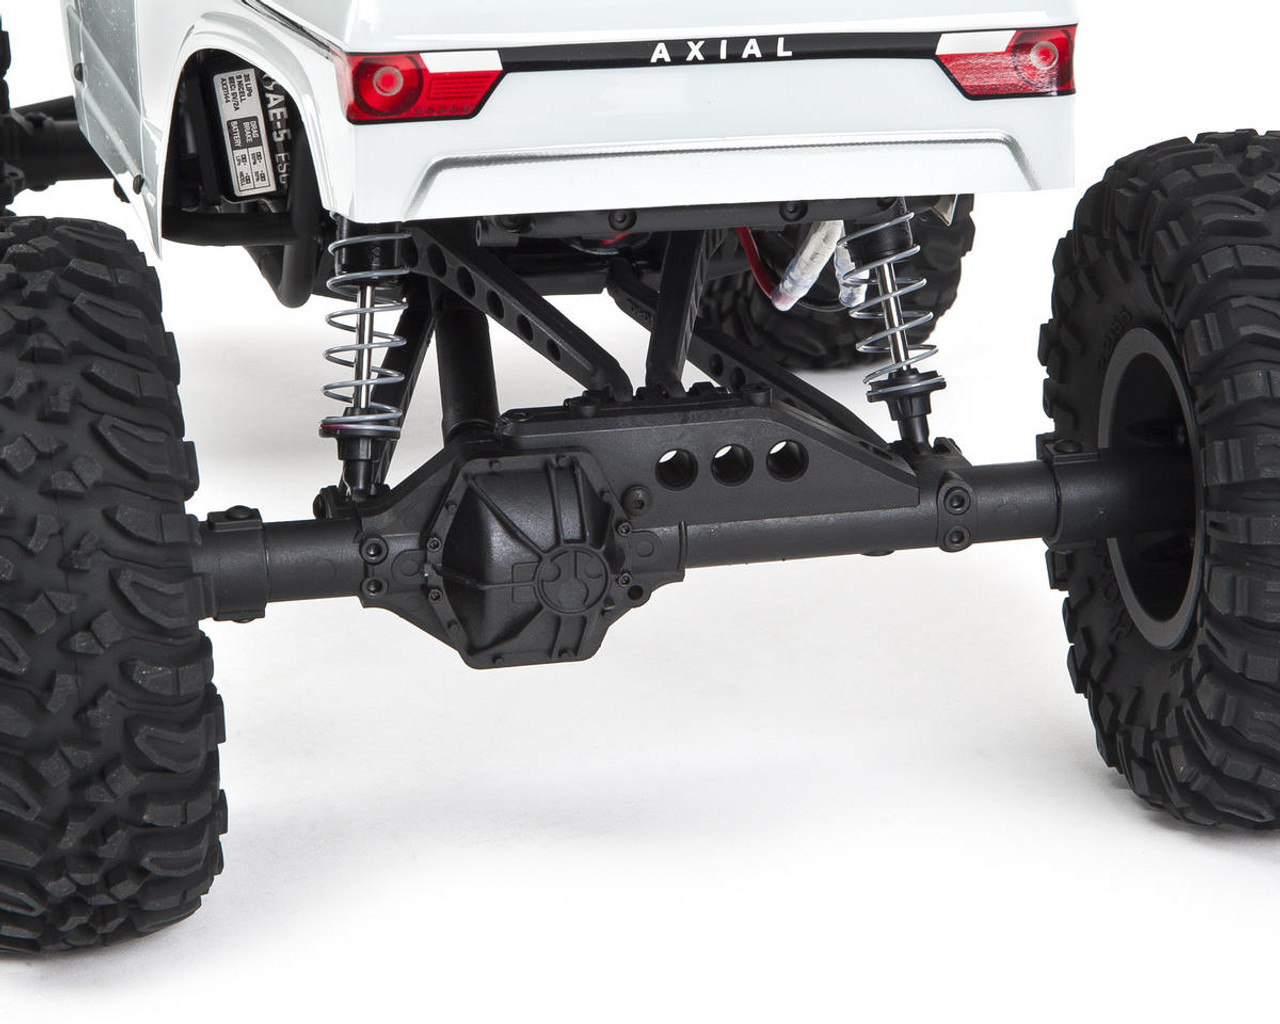 Axial Racing Wraith 90045 "Spawn" RTR 4WD Electric Rock Crawler